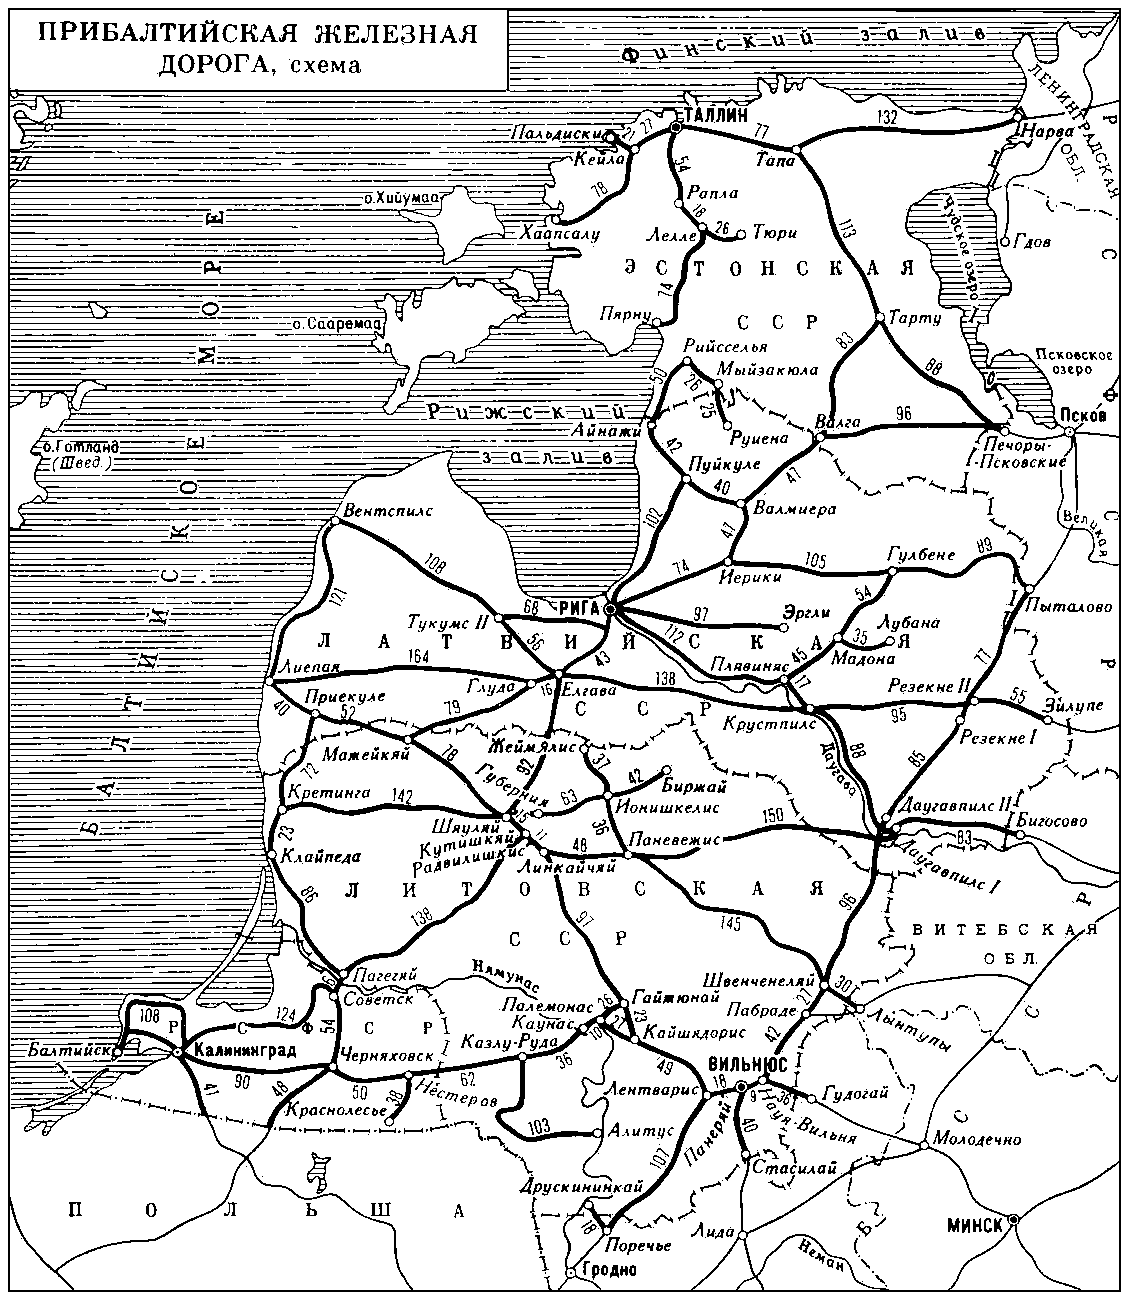 Прибалтийская железная дорога